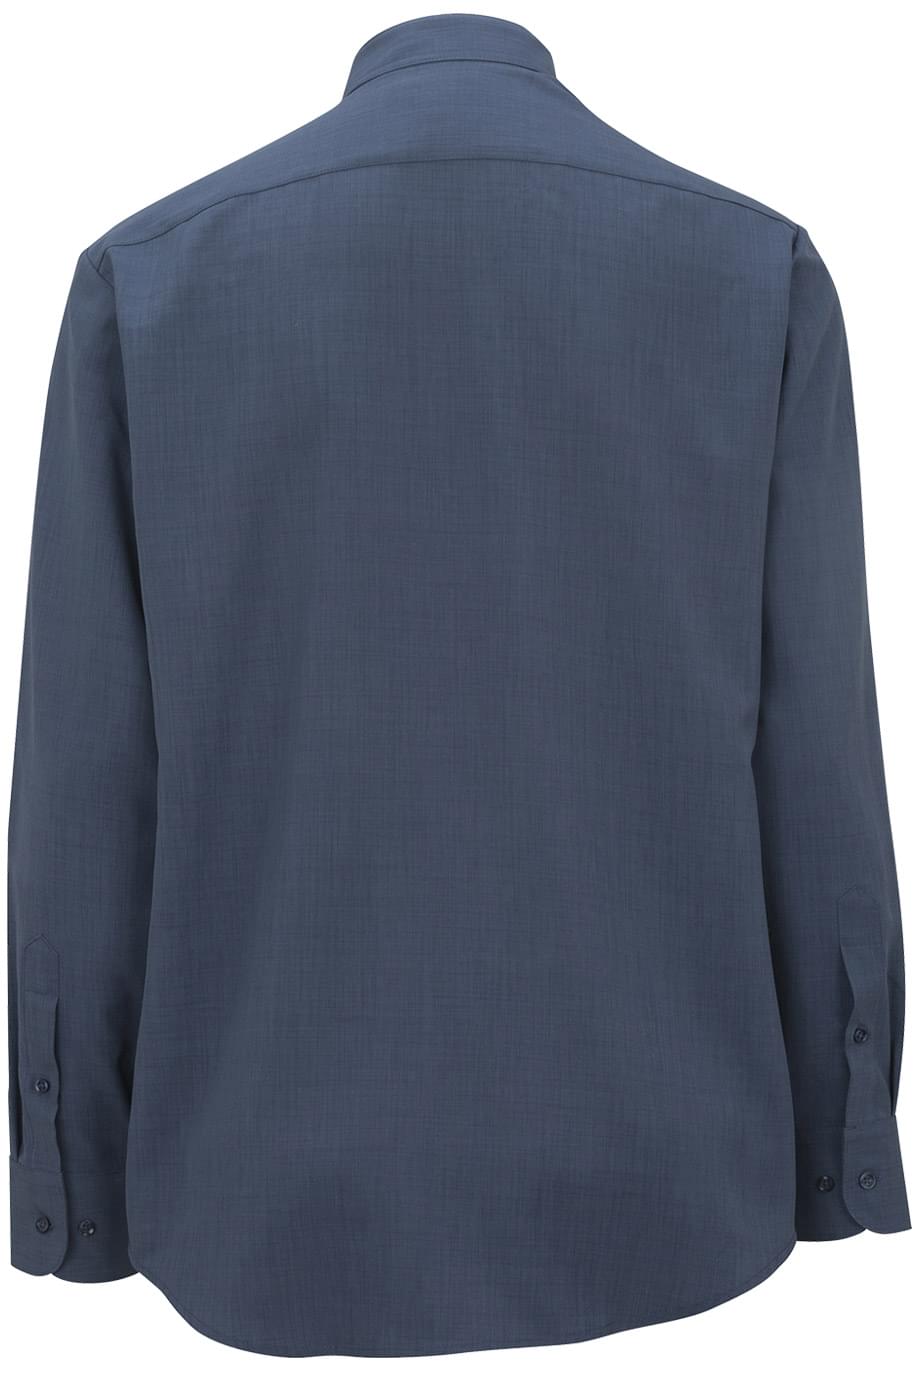 BANDED COLLAR BATISTE SHIRT | Edwards Garment